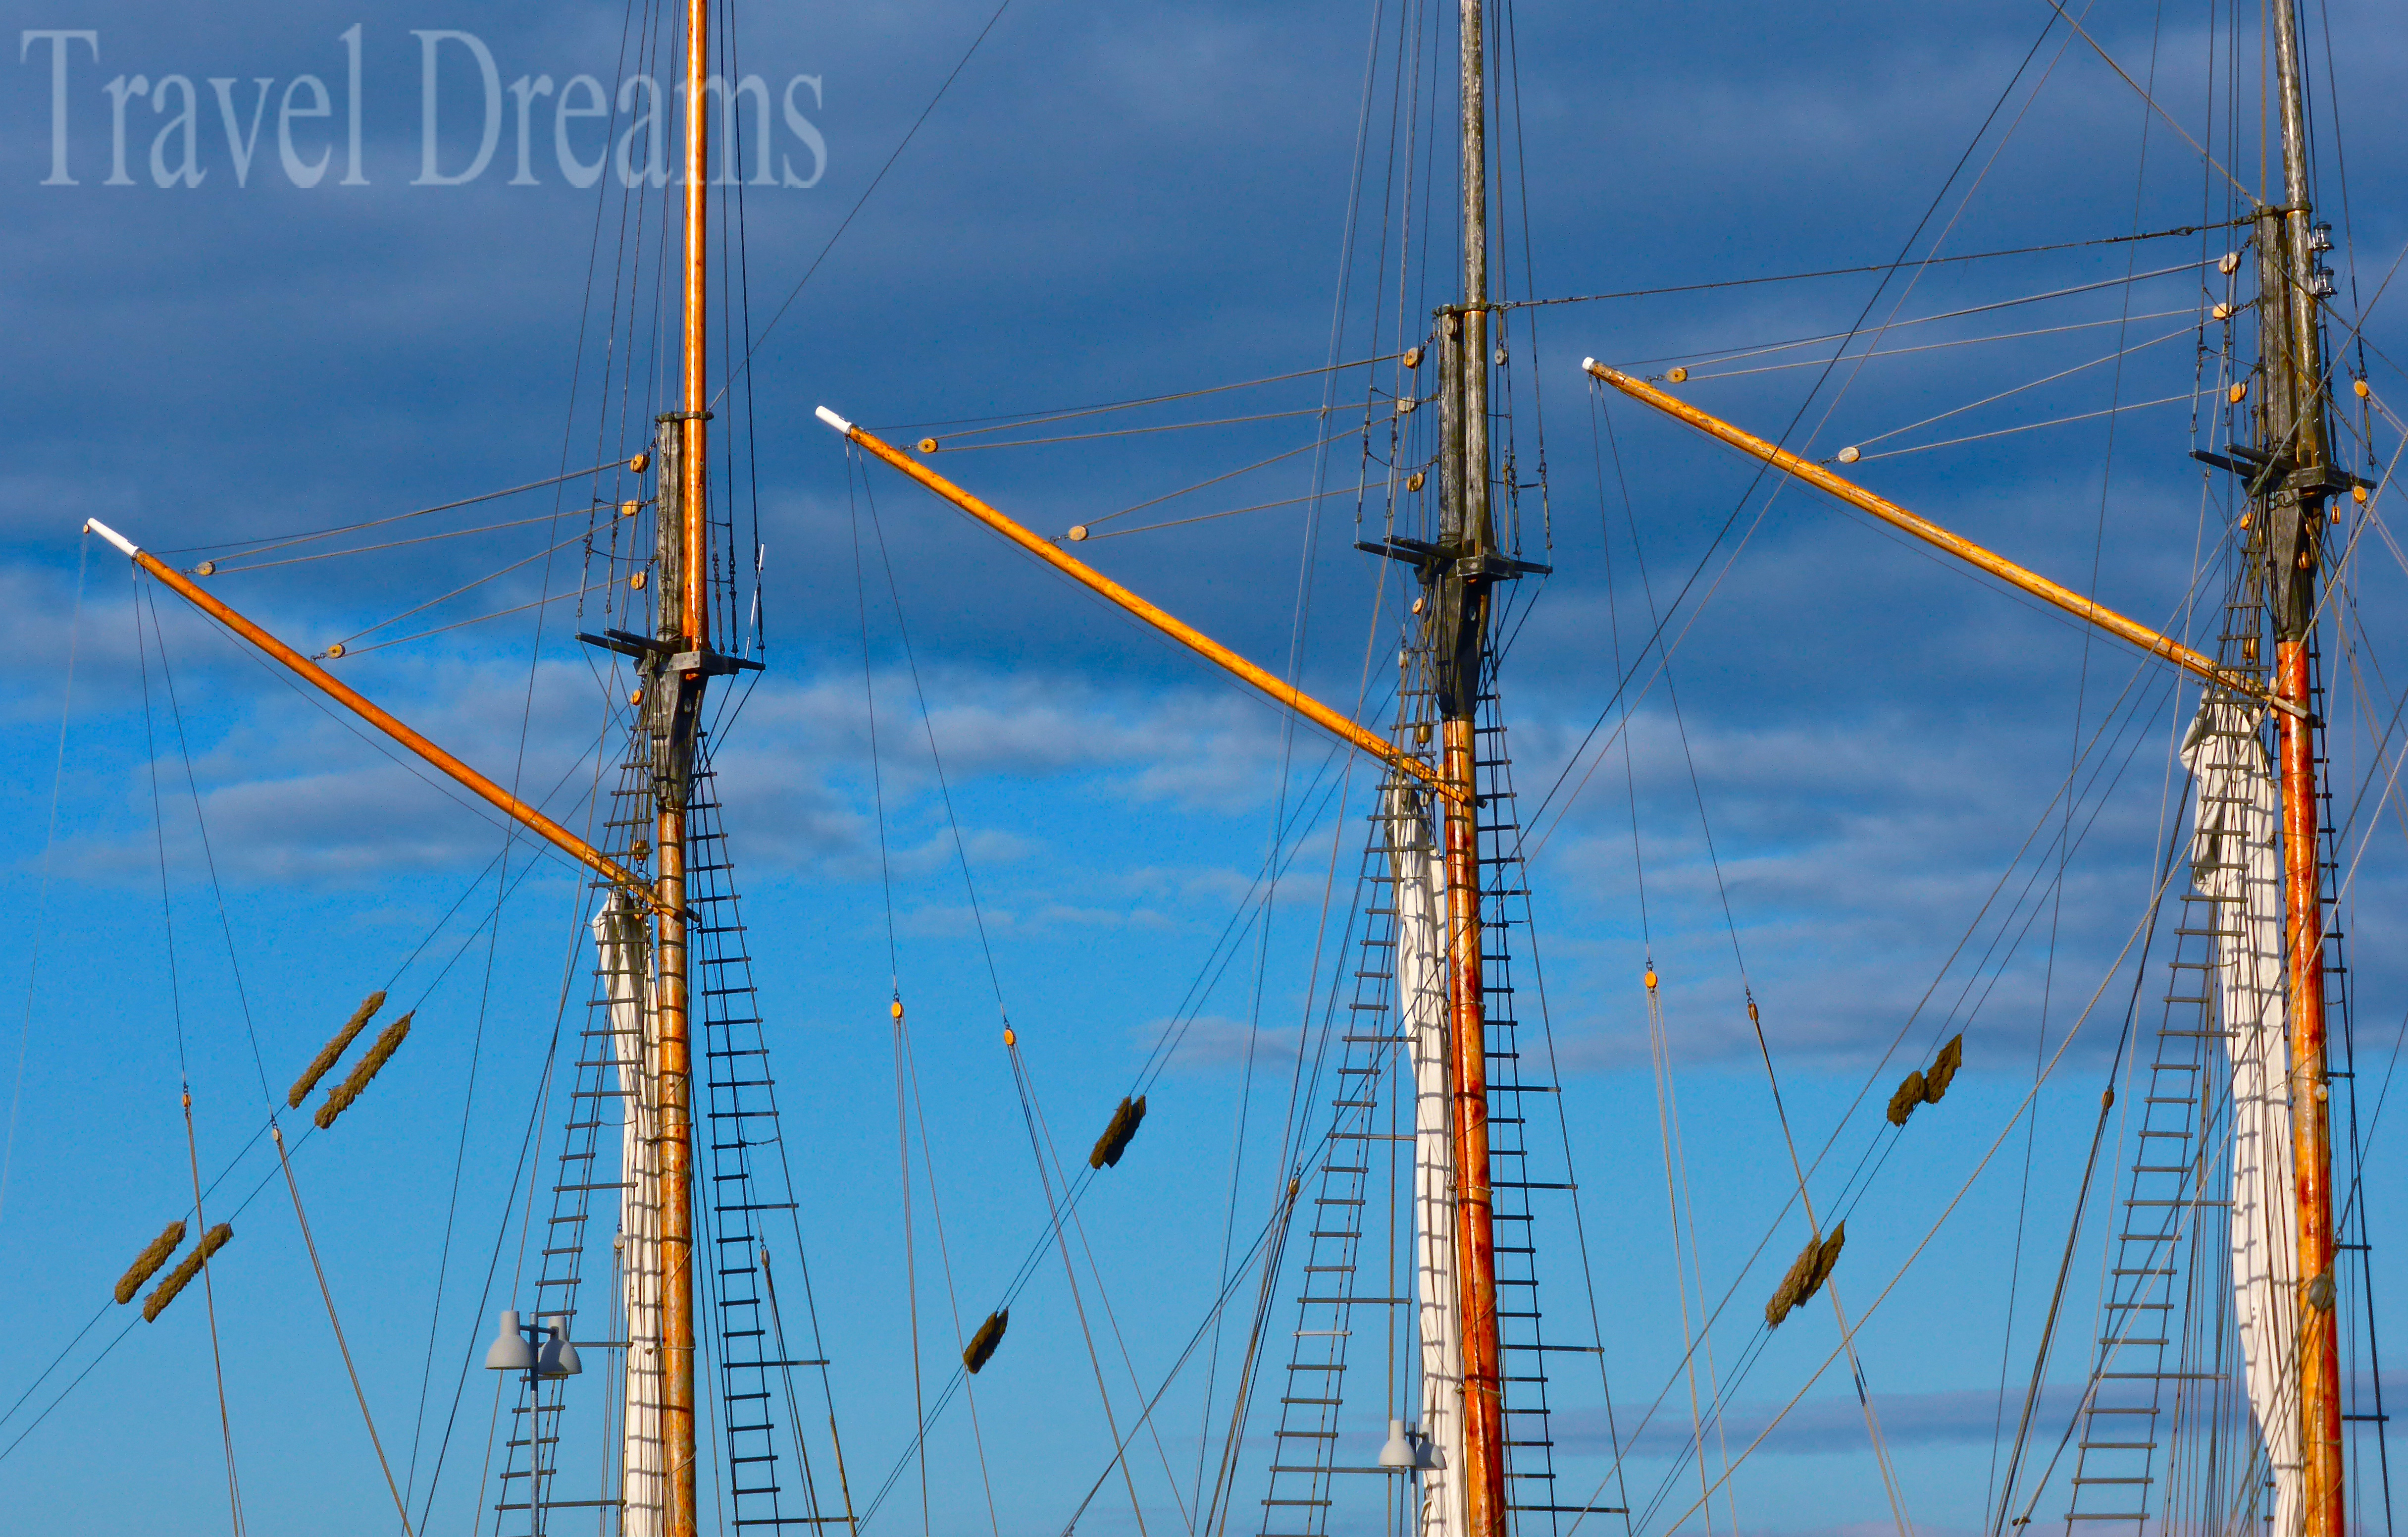 Helsinki Masts